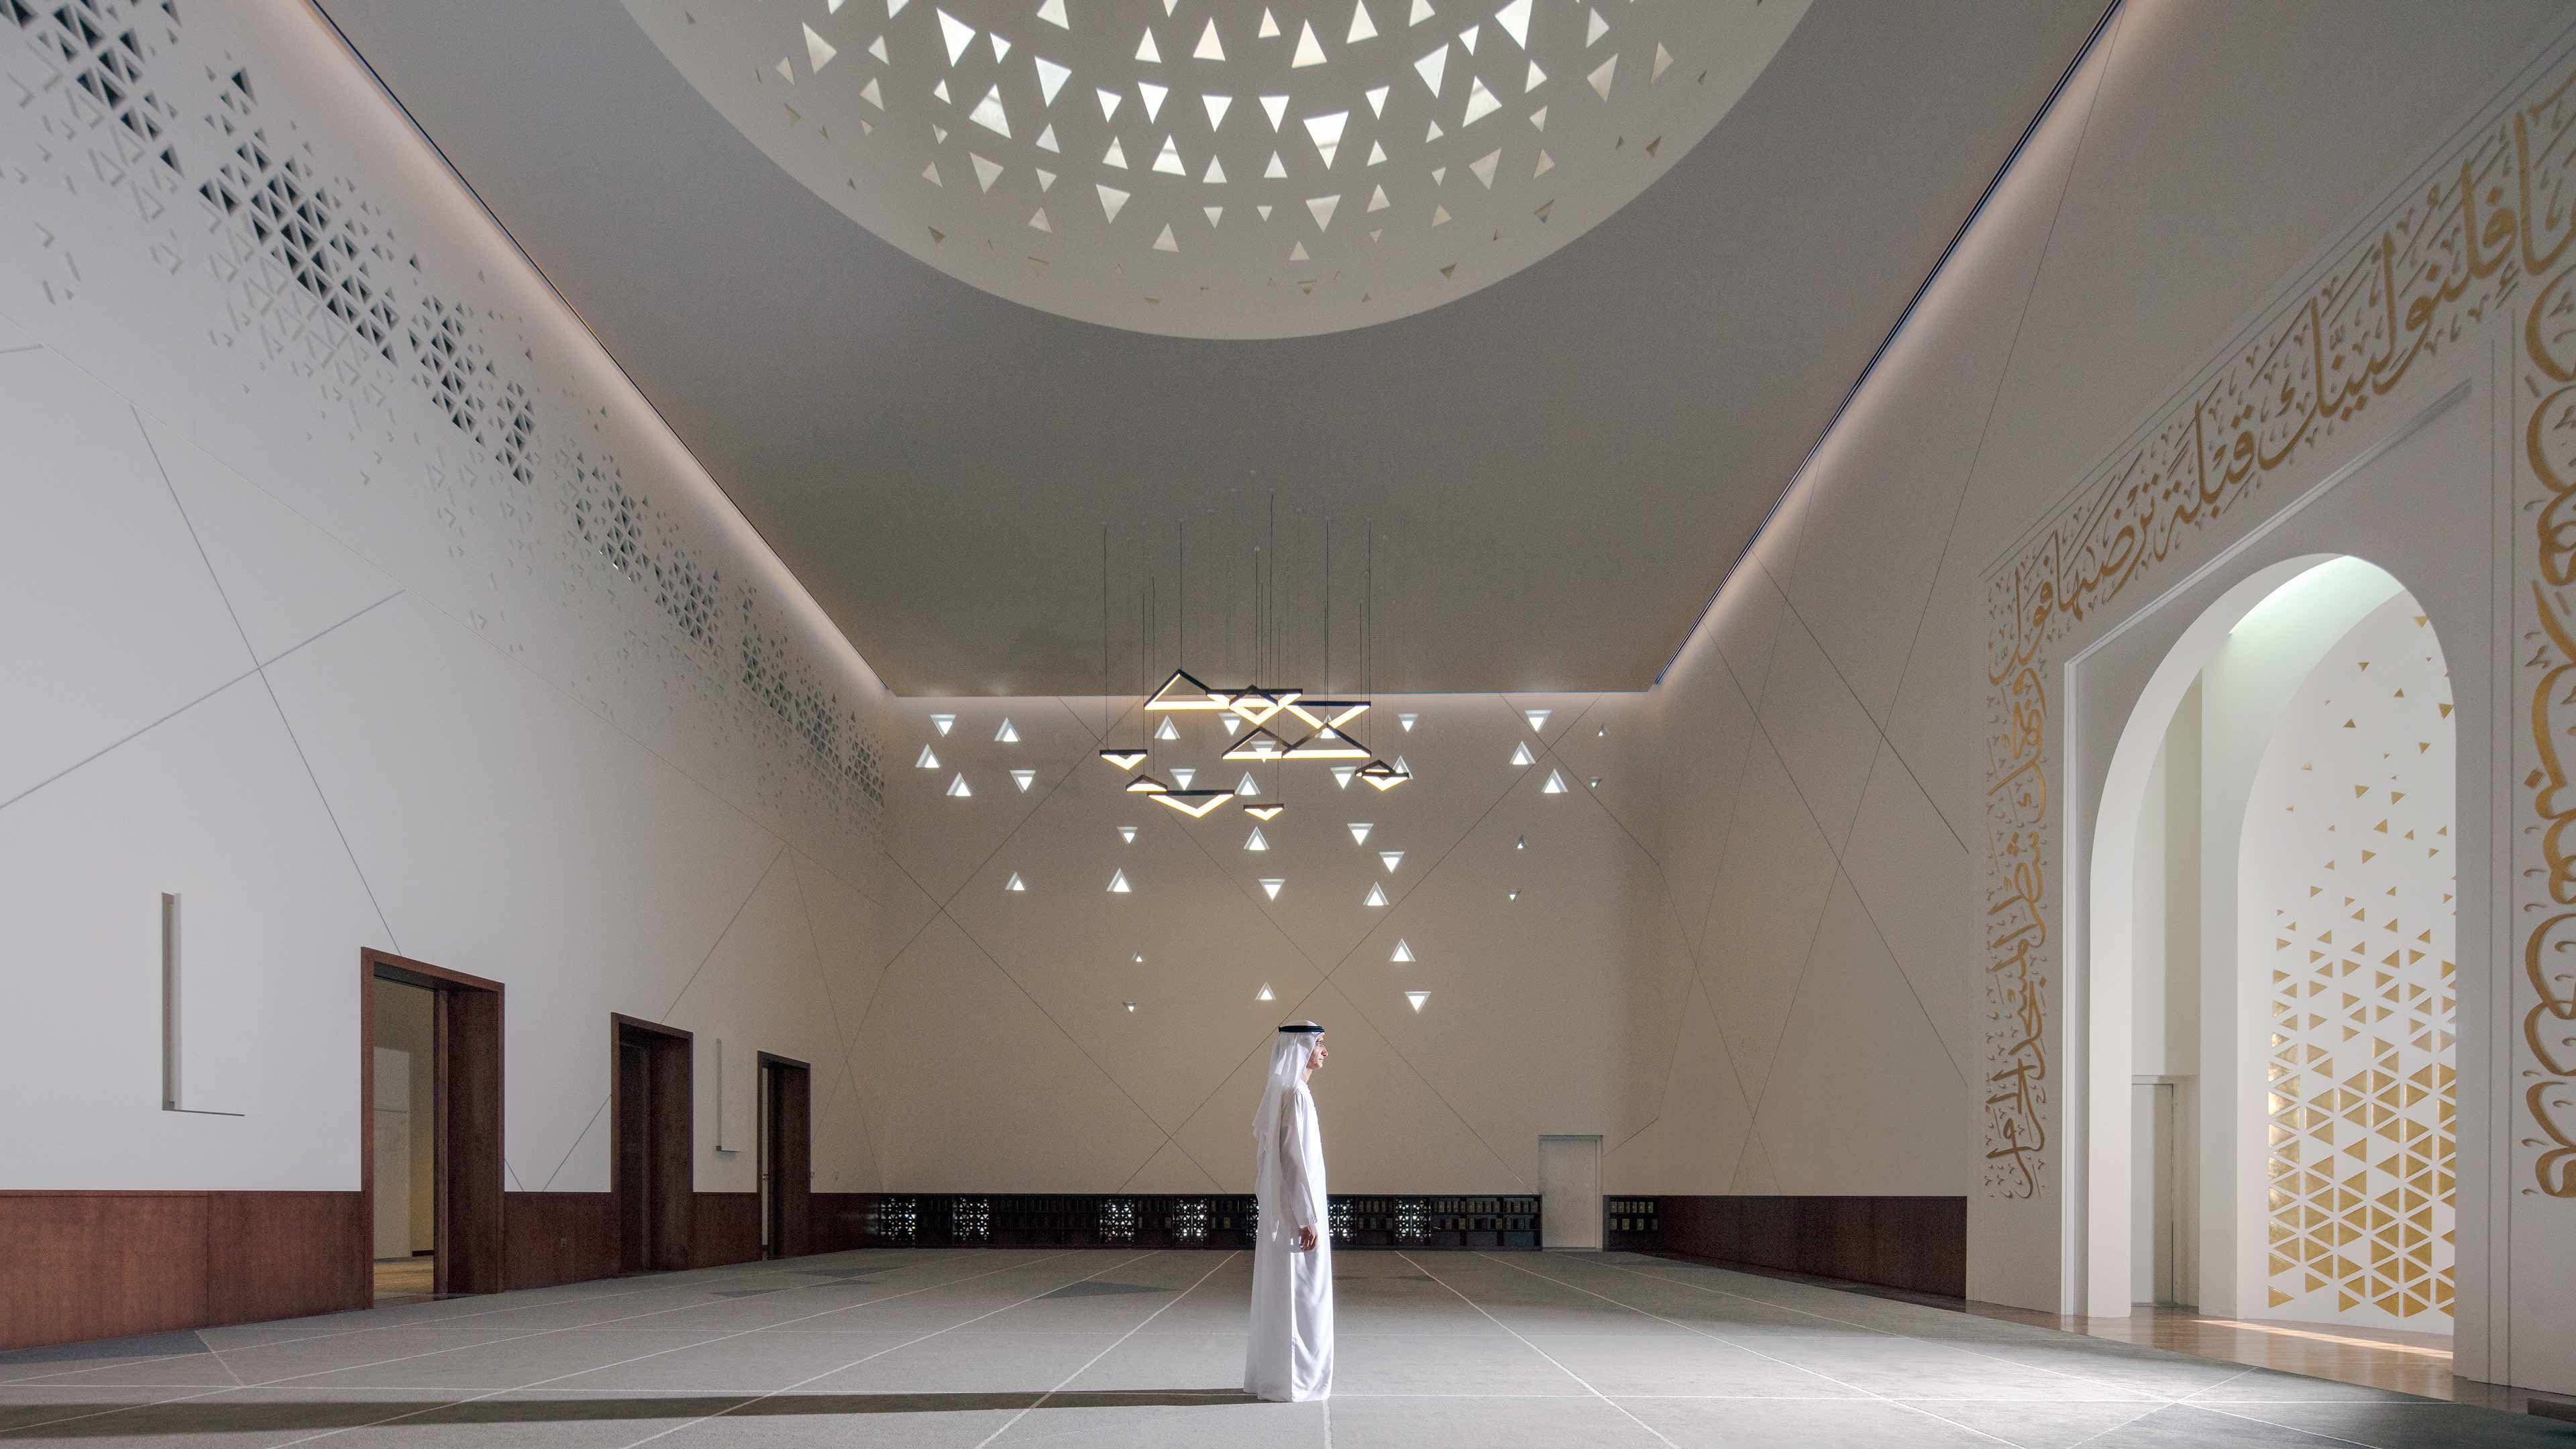 Architectural Lighting Contemporary Mosque Prayer Hall Design Consultants Dubai Studio N